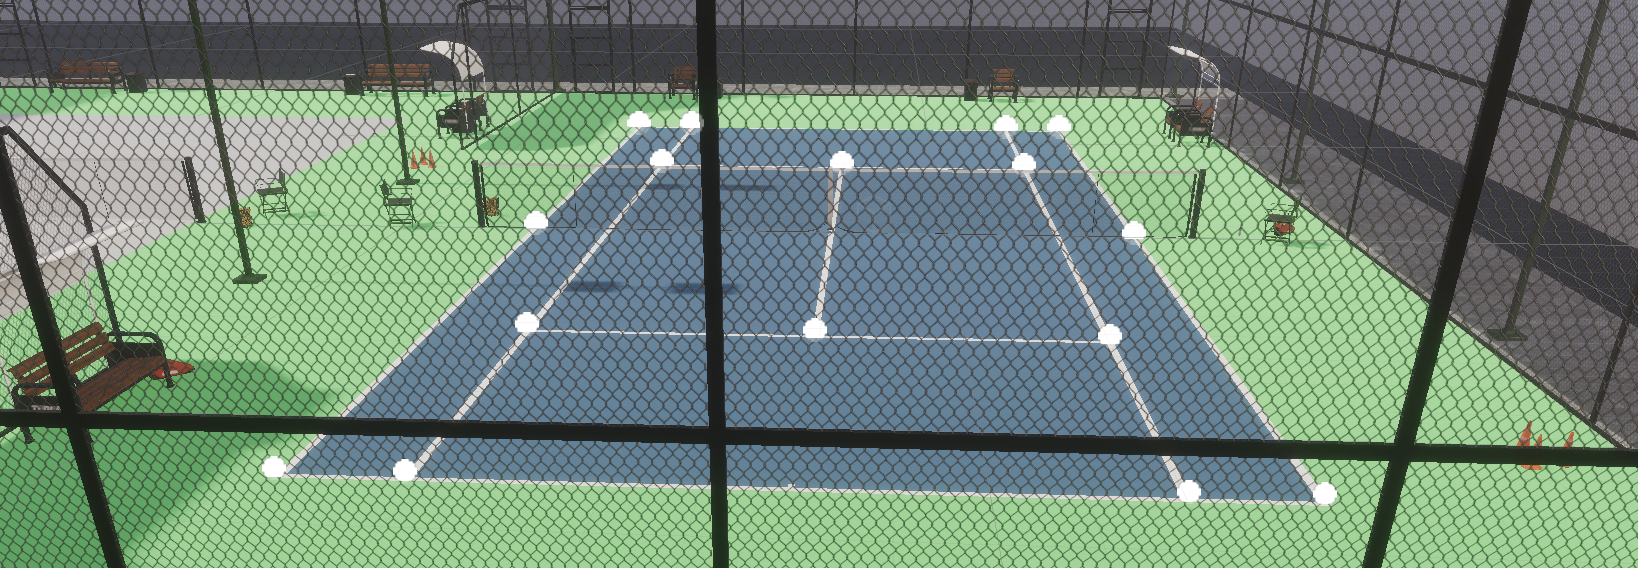 Tennis court line detector: Part 5, test on unseen tennis court